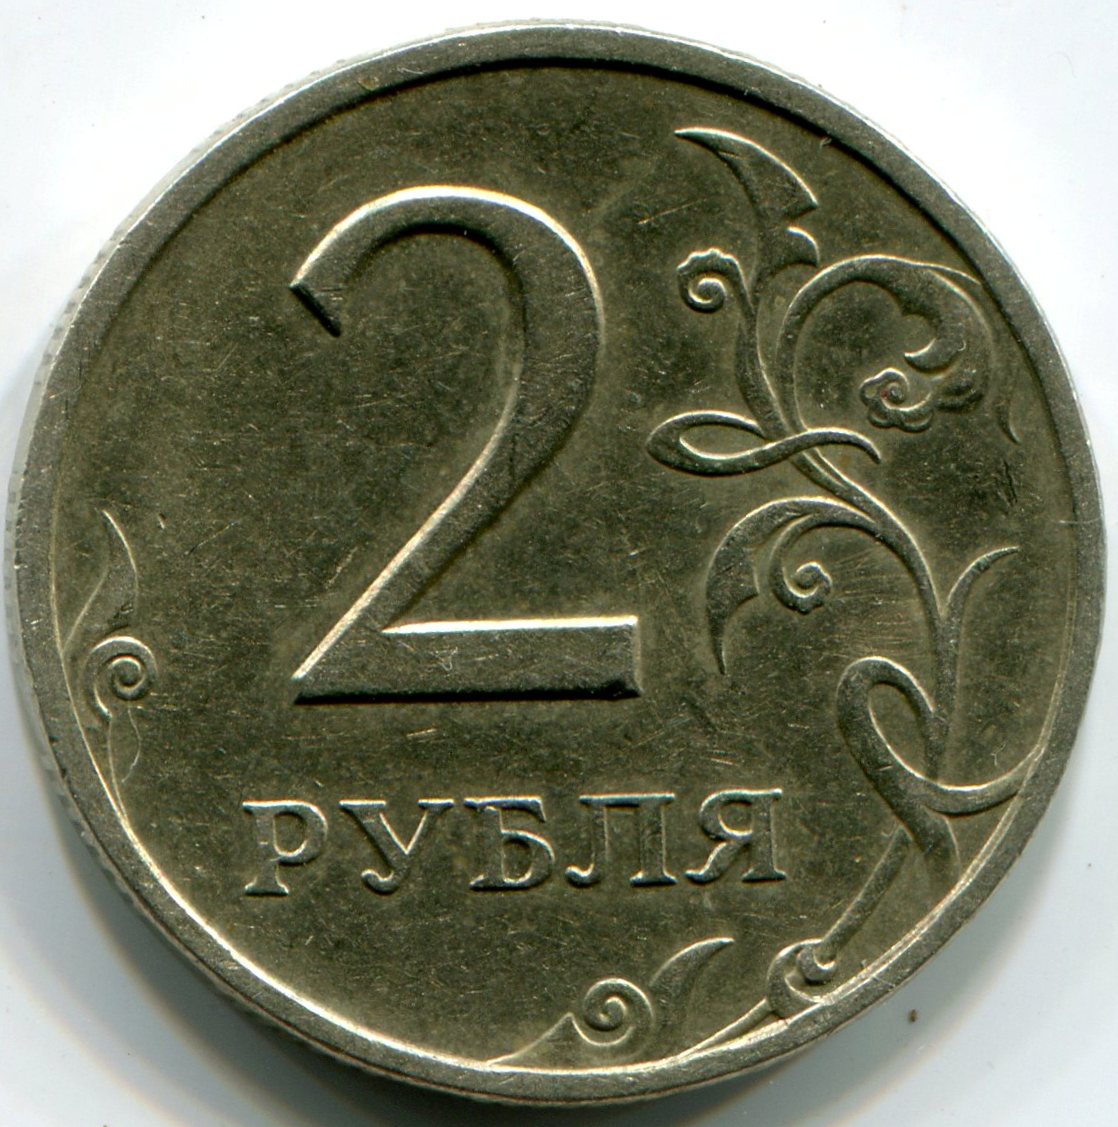 2 рубль 1997 года цена стоимость. Монета 2 рубля. Монета два рубля. Монеты 2011 2 рубля. Монета 2 рубля на прозрачном фоне.